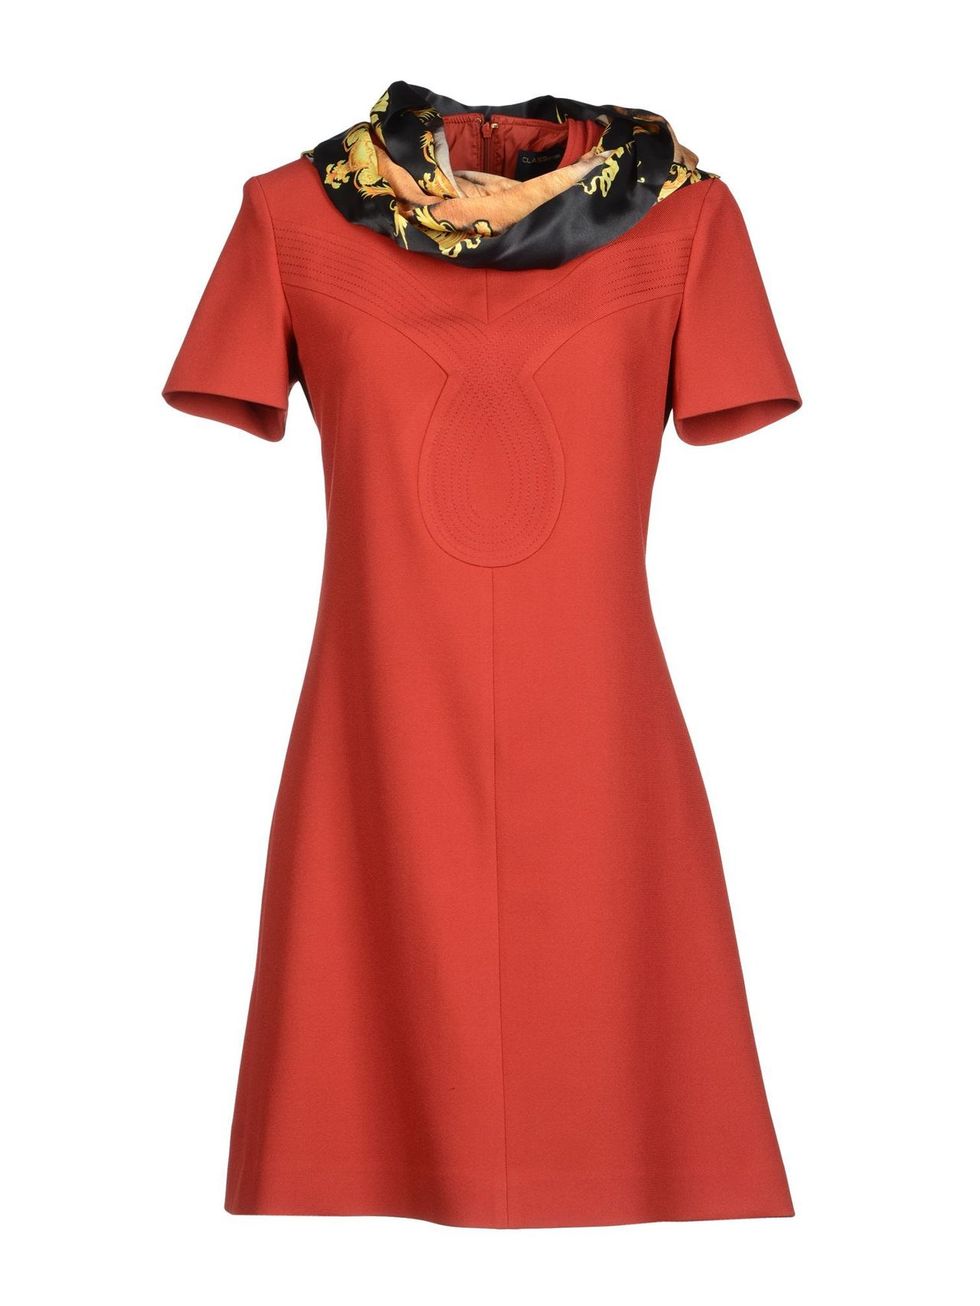 Sleeve, Textile, Red, Dress, Orange, Carmine, Fashion, One-piece garment, Maroon, Neck, 